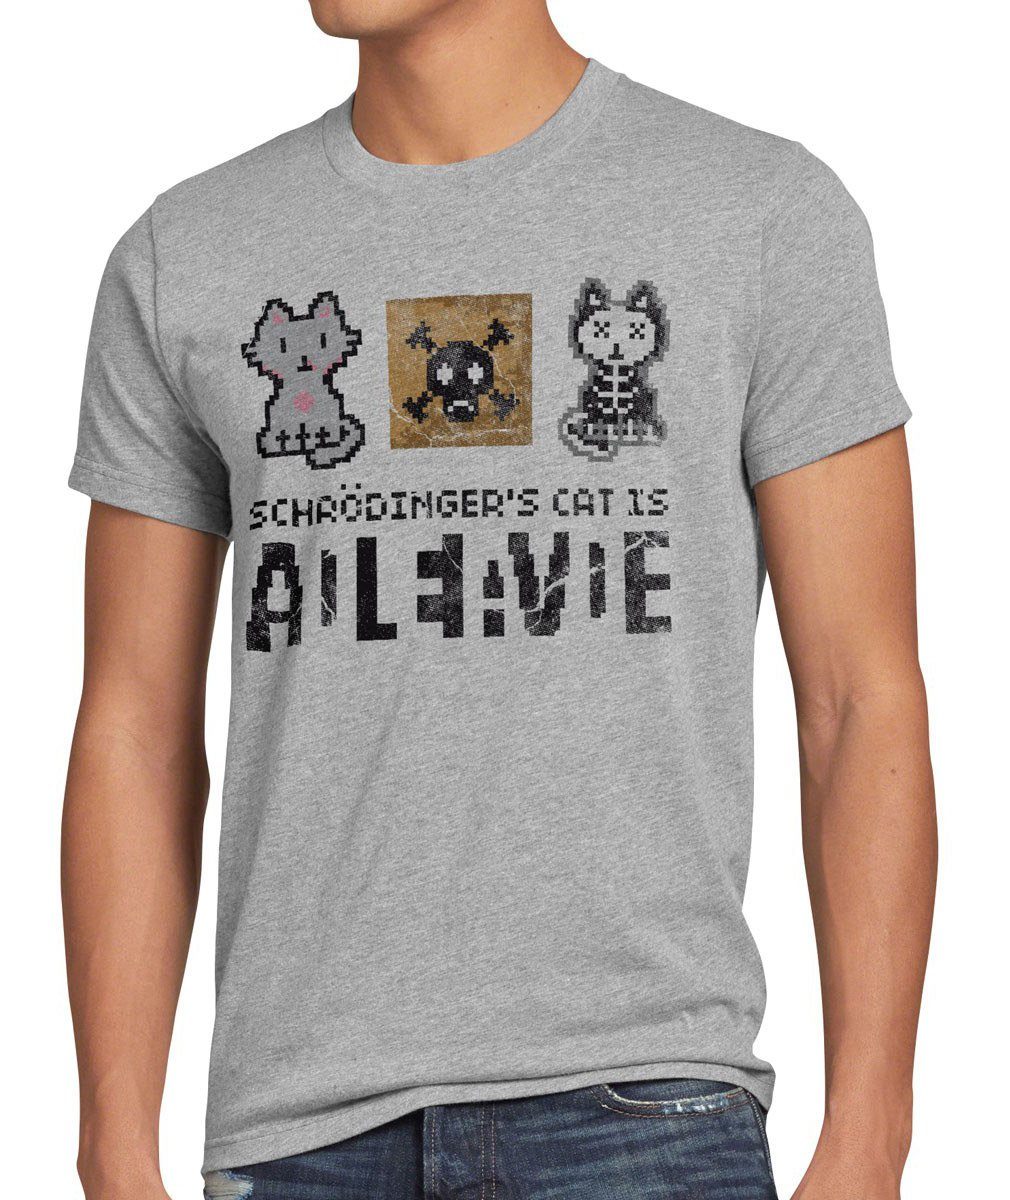 style3 Print-Shirt Herren T-Shirt 8Bit Schrödingers Katze big bang cooper cat schroedinger sheldon grau meliert